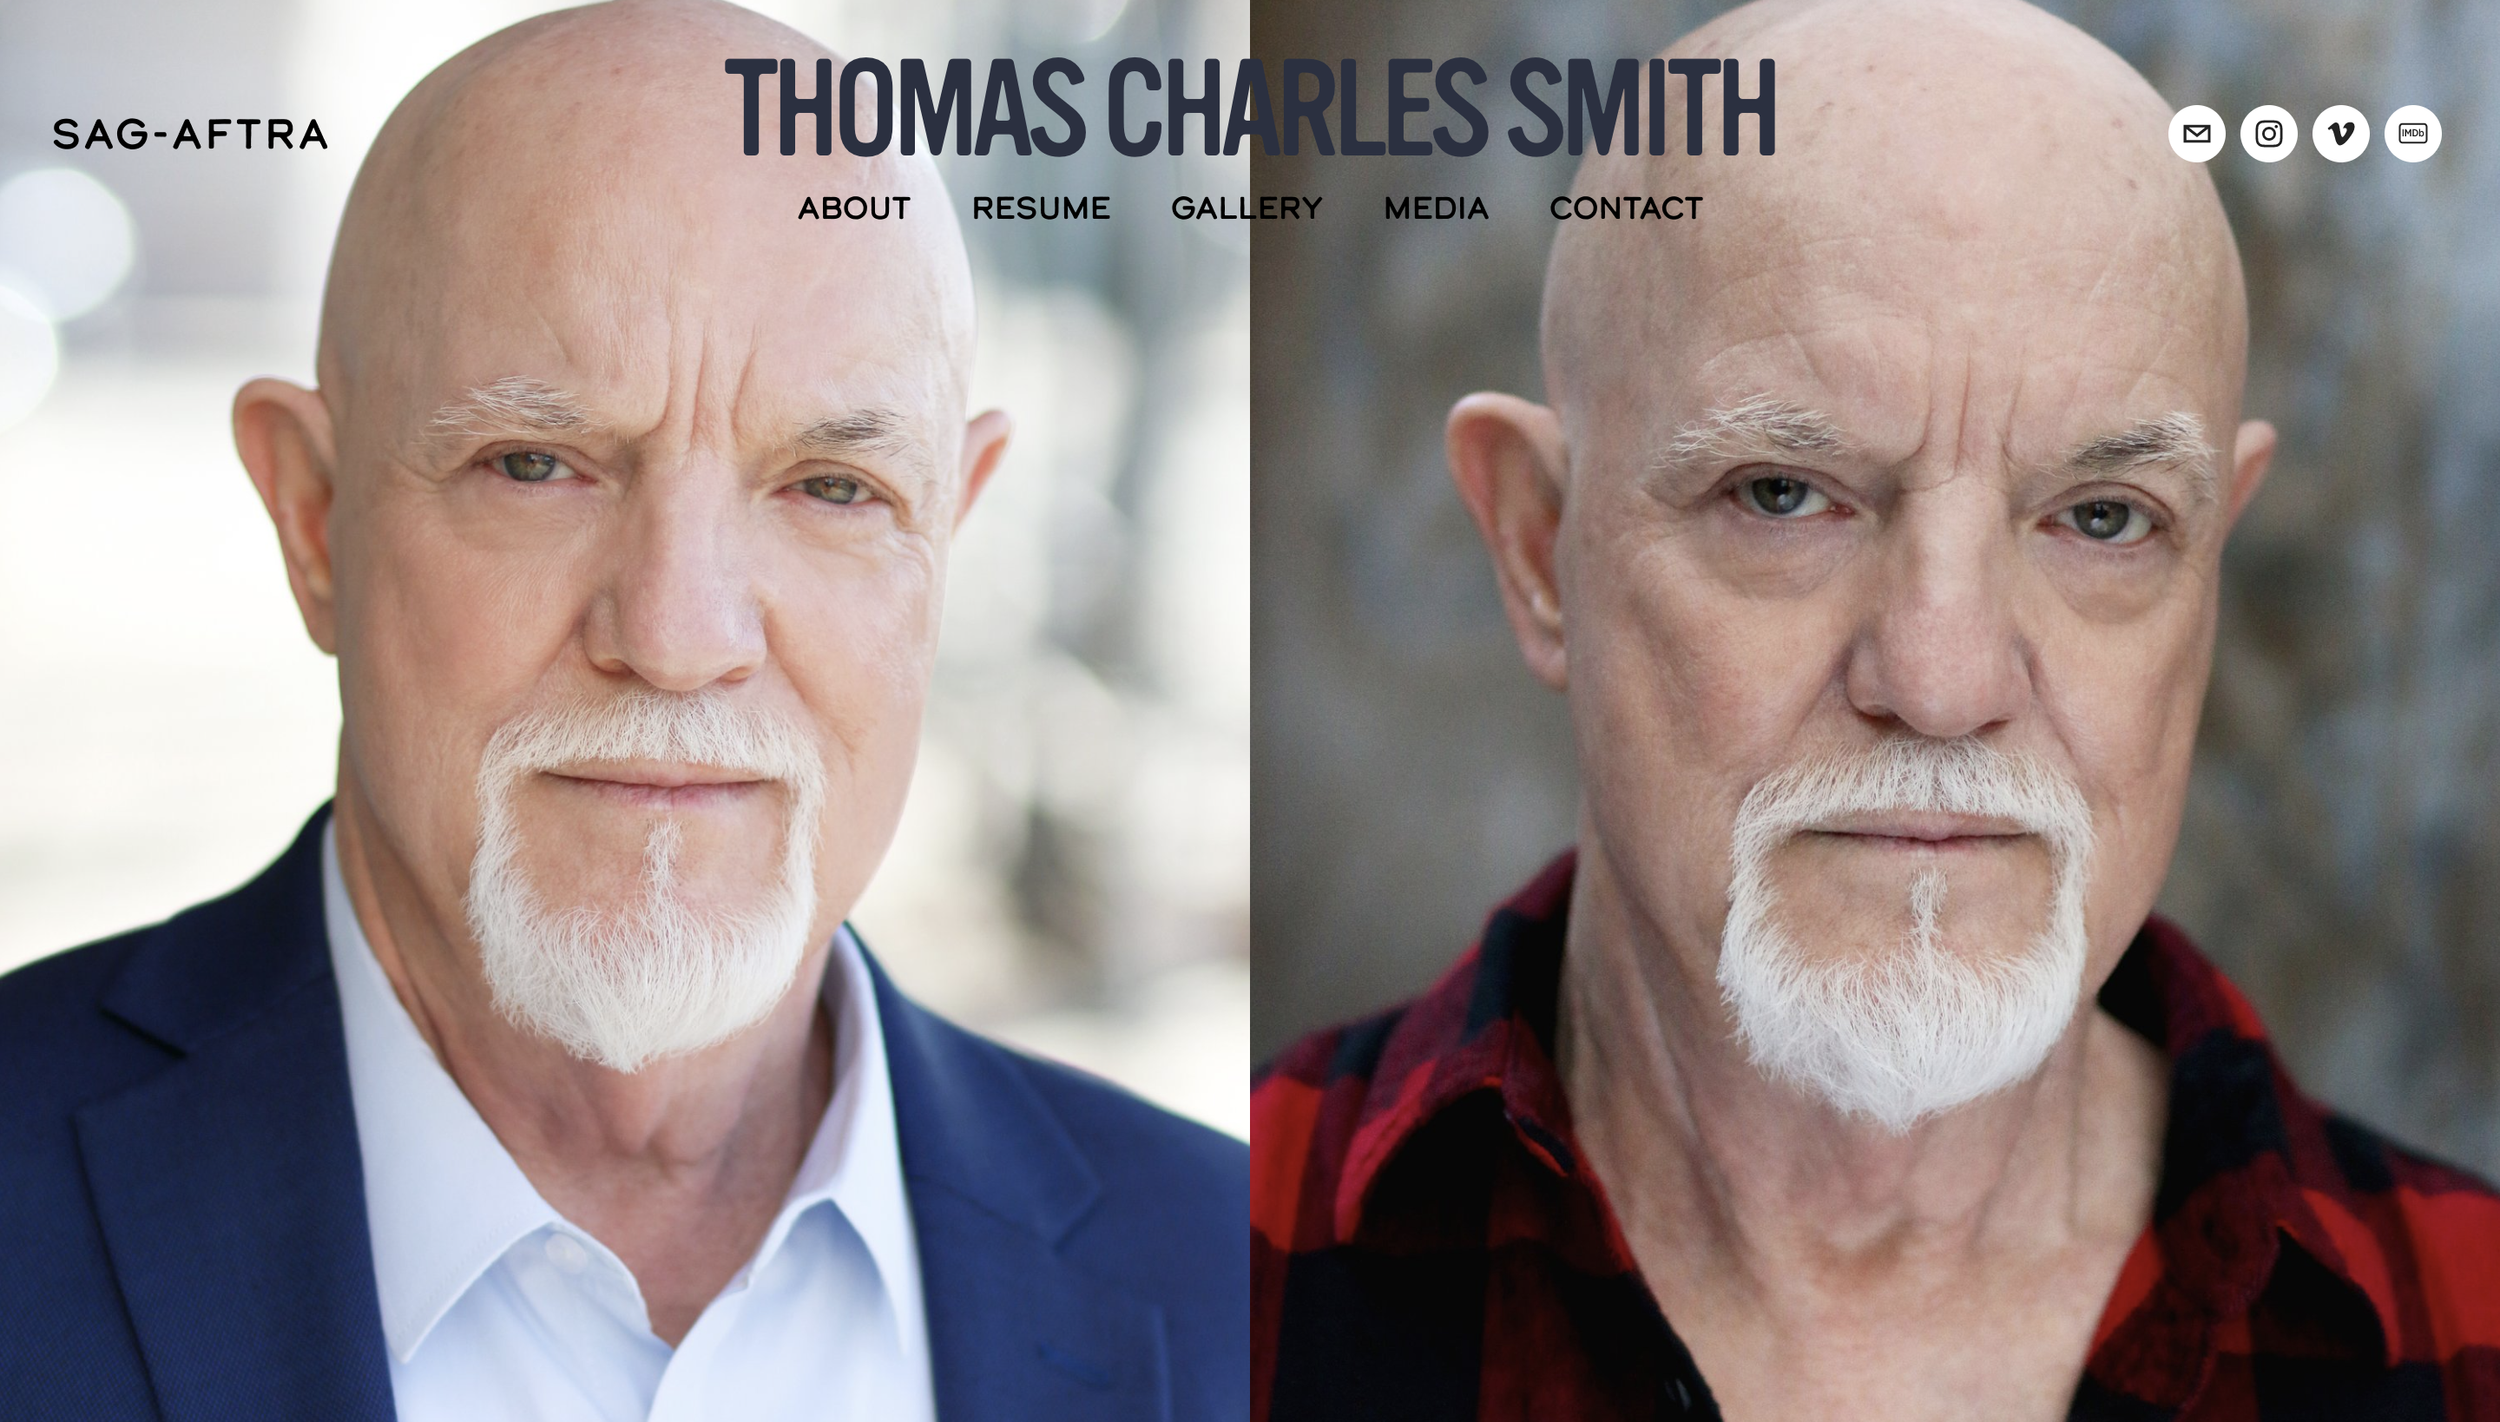 Thomas Charles Smith